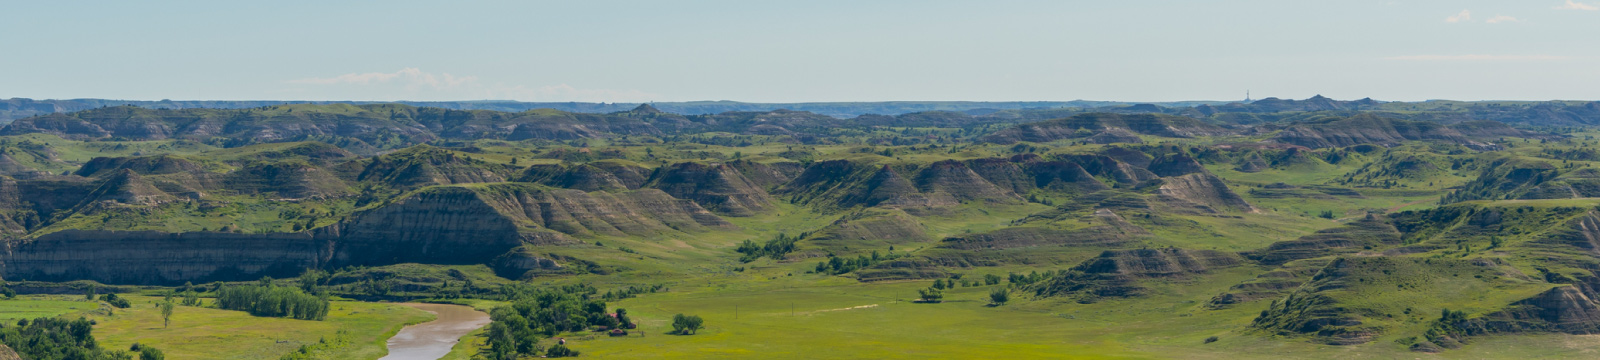 A North Dakota landscape